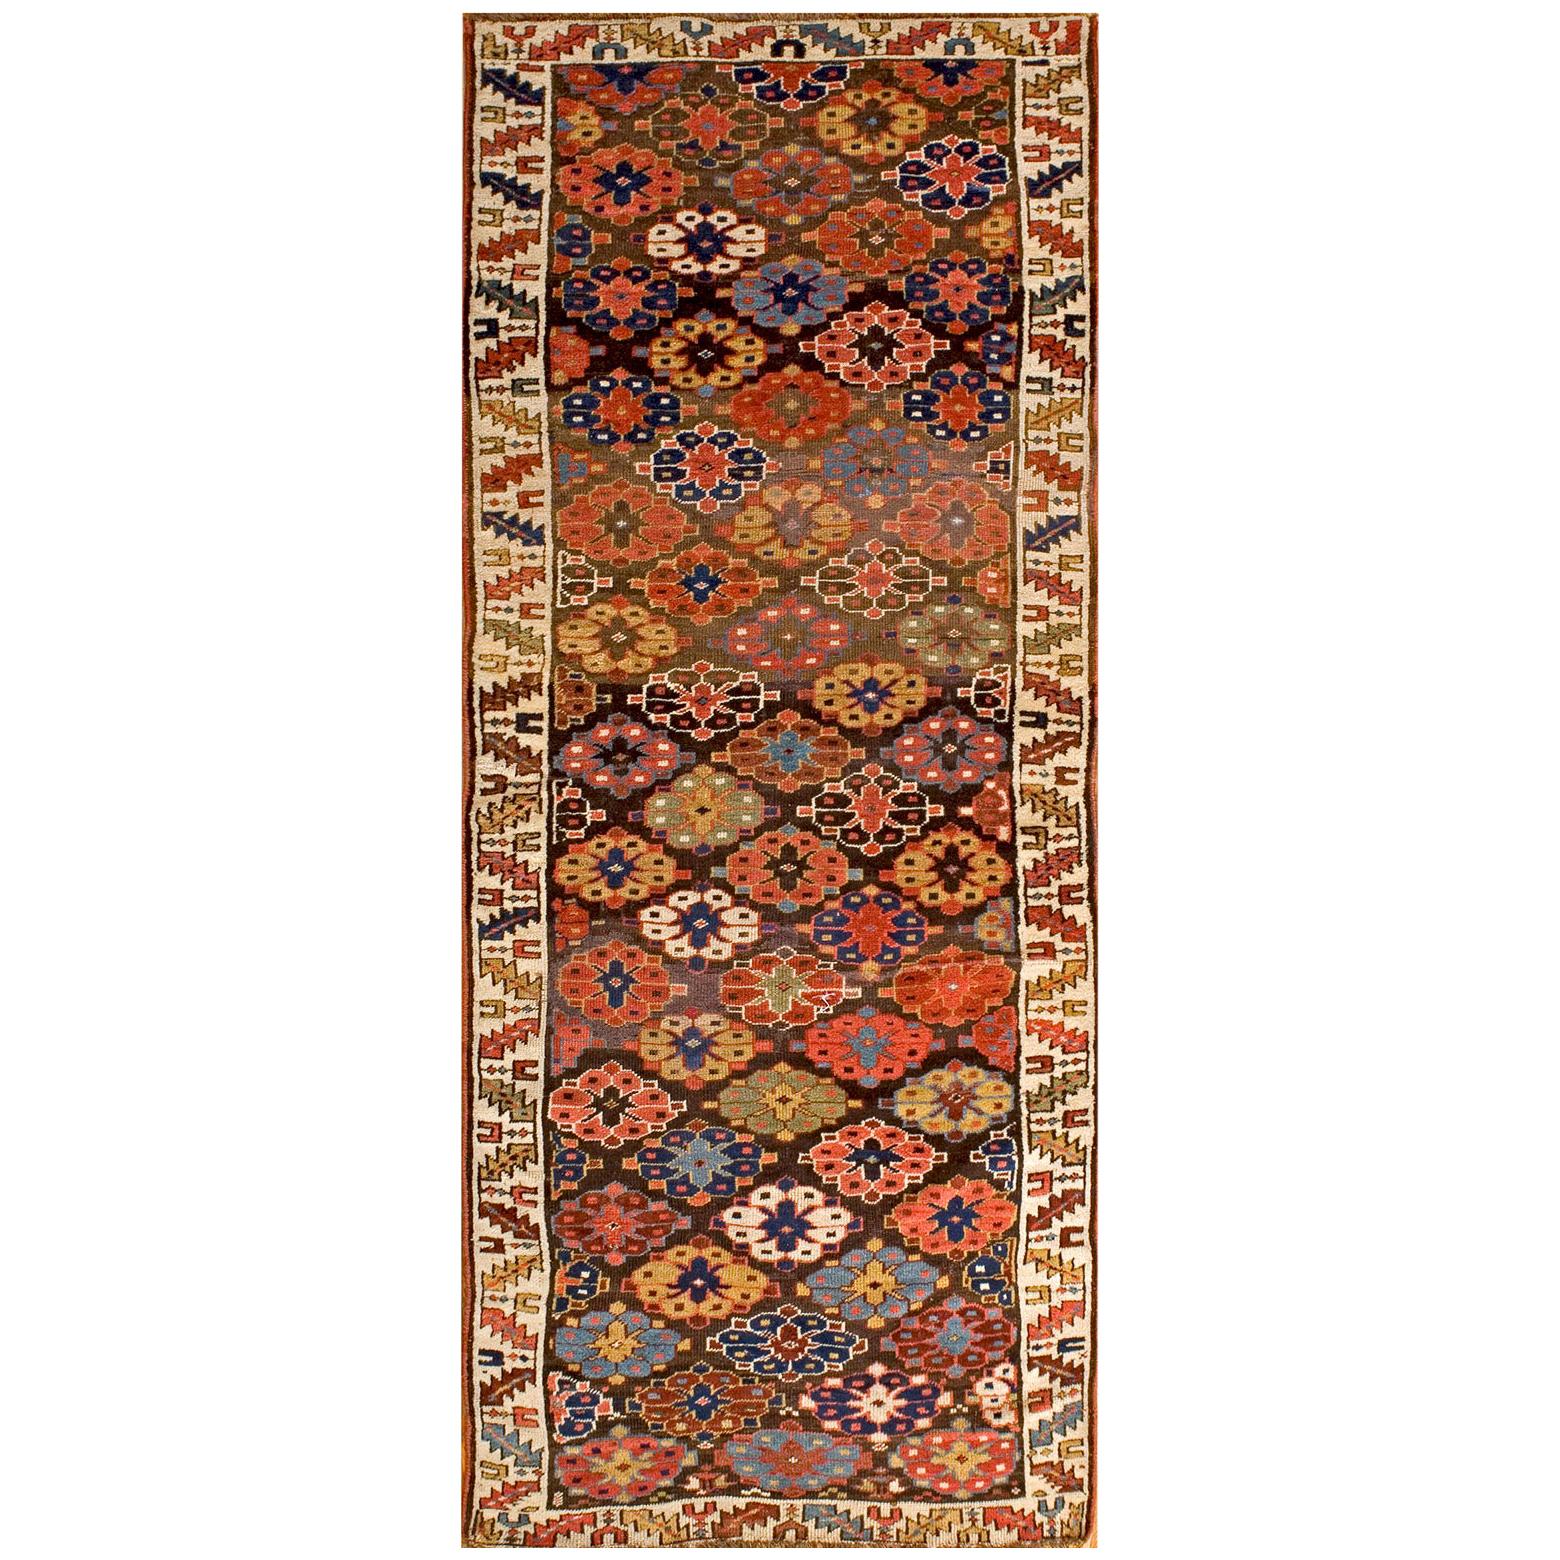 Antique North West Persian Rug